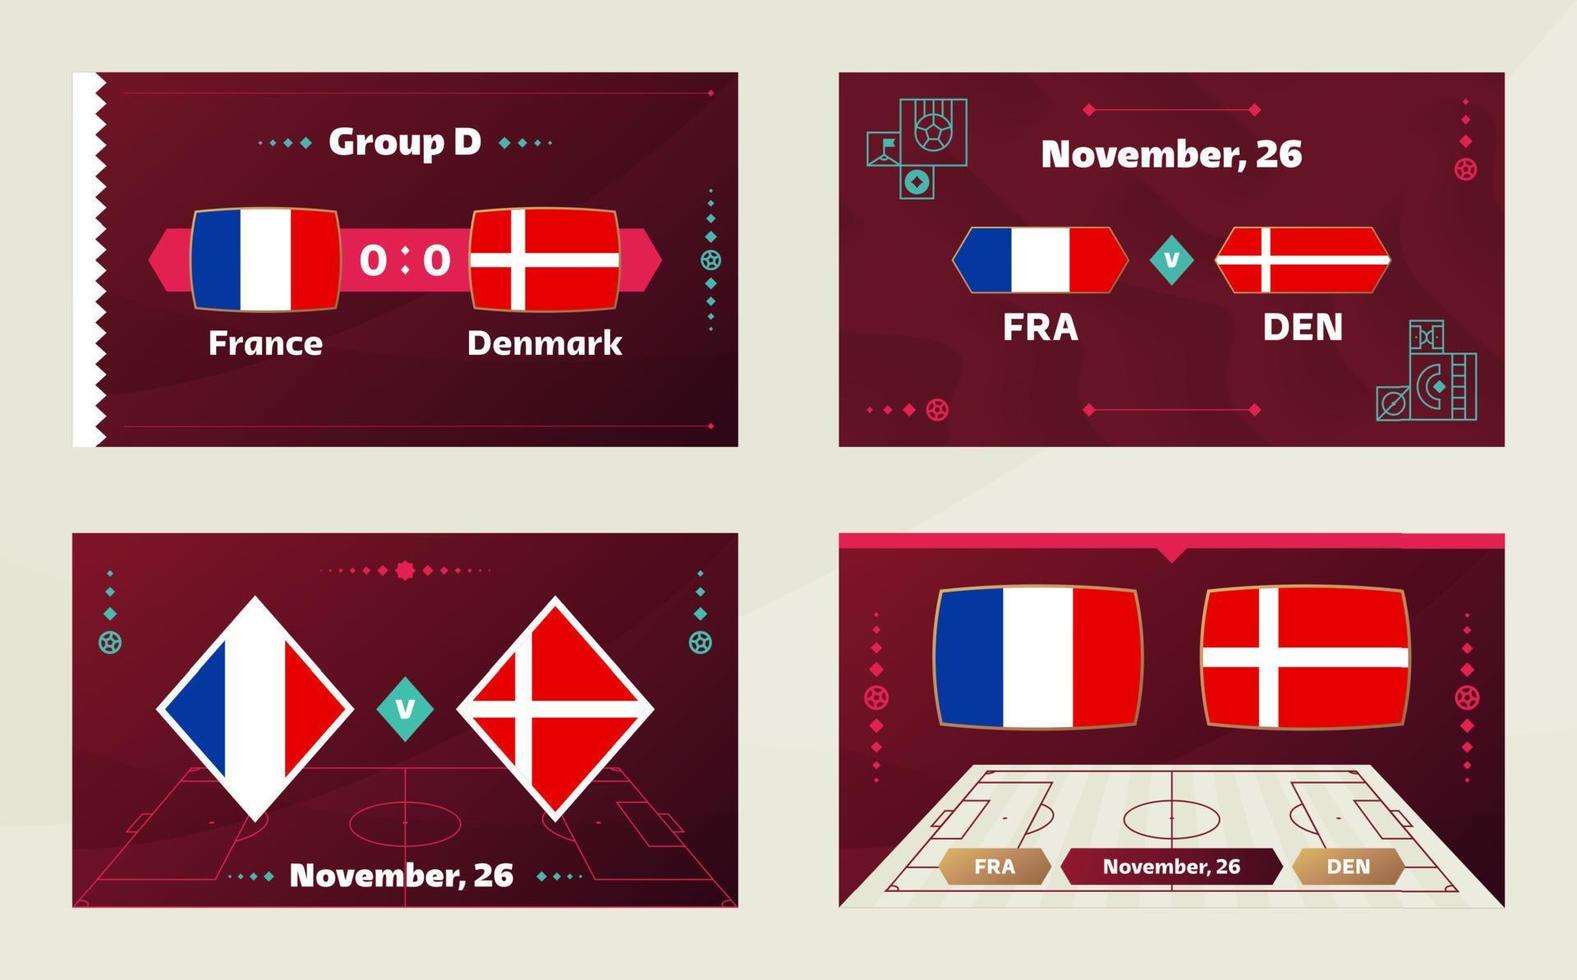 France vs Denmark, Football 2022, Group D. World Football Competition championship match versus teams intro sport background, championship competition final poster, vector illustration.